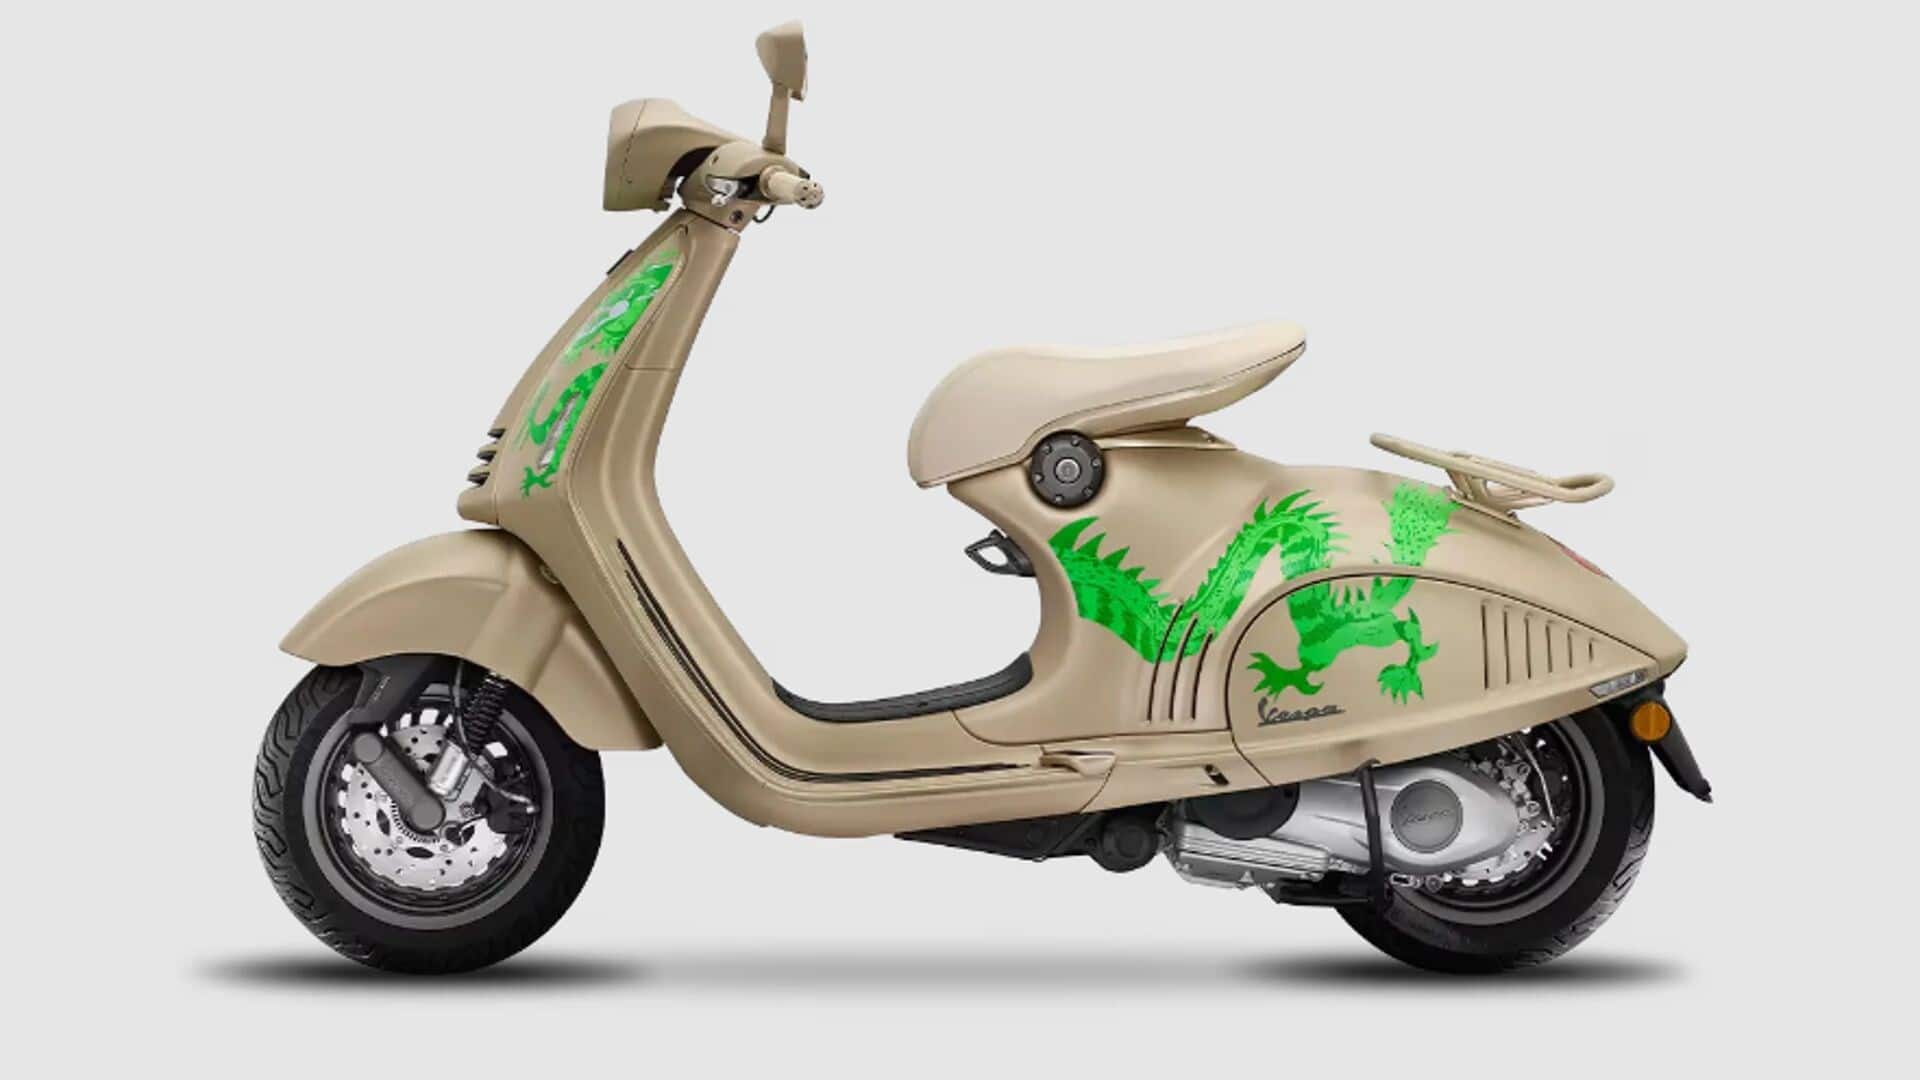 Scooter costlier than CRETA? Vespa 946 Dragon debuts at ₹14L